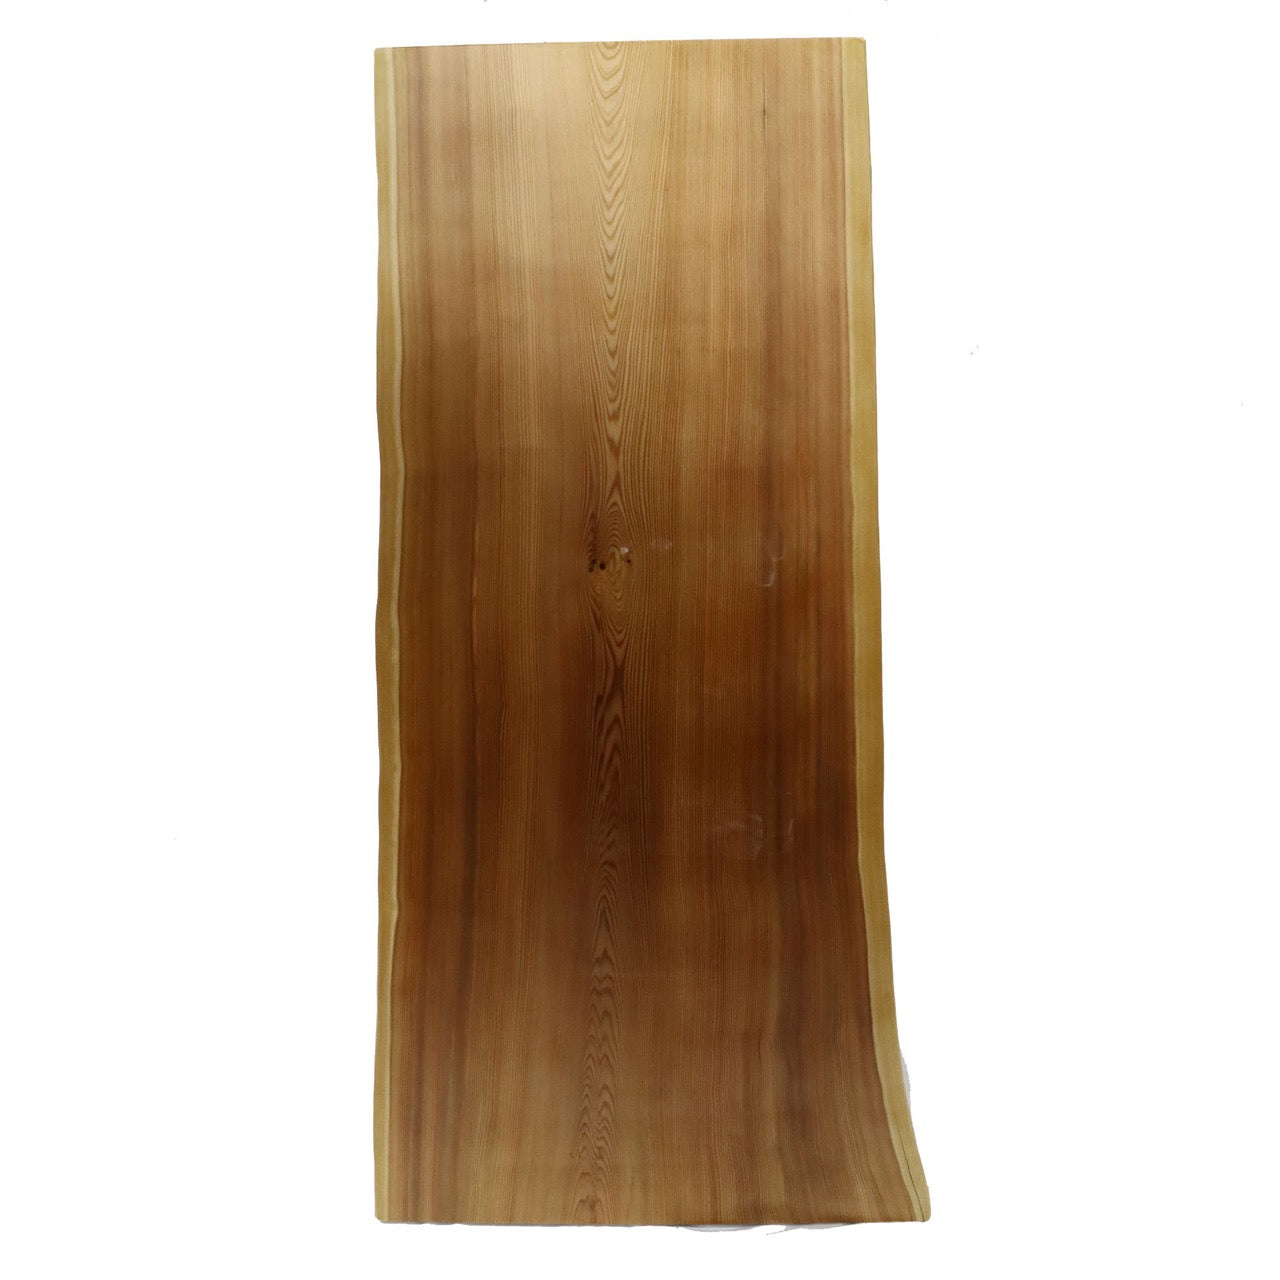 A0010 吉野杉無垢一枚板 テーブル天板 1,840mm×770mm×75mm